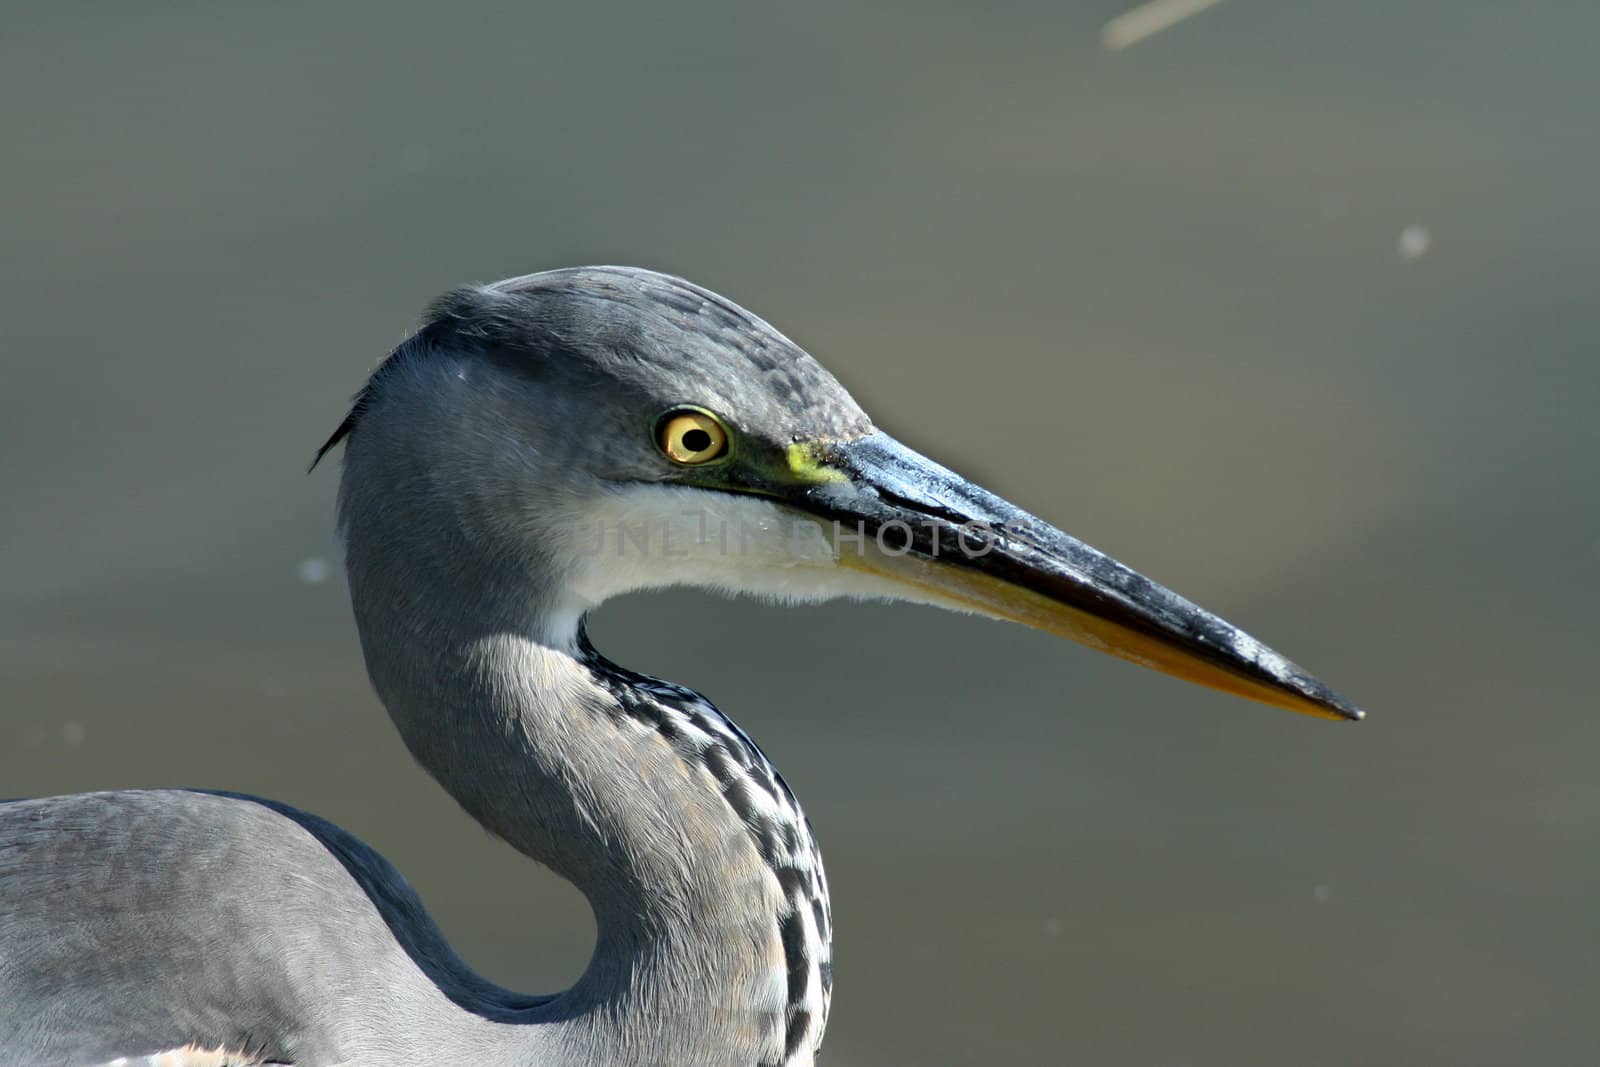 Portrait of a gray heron